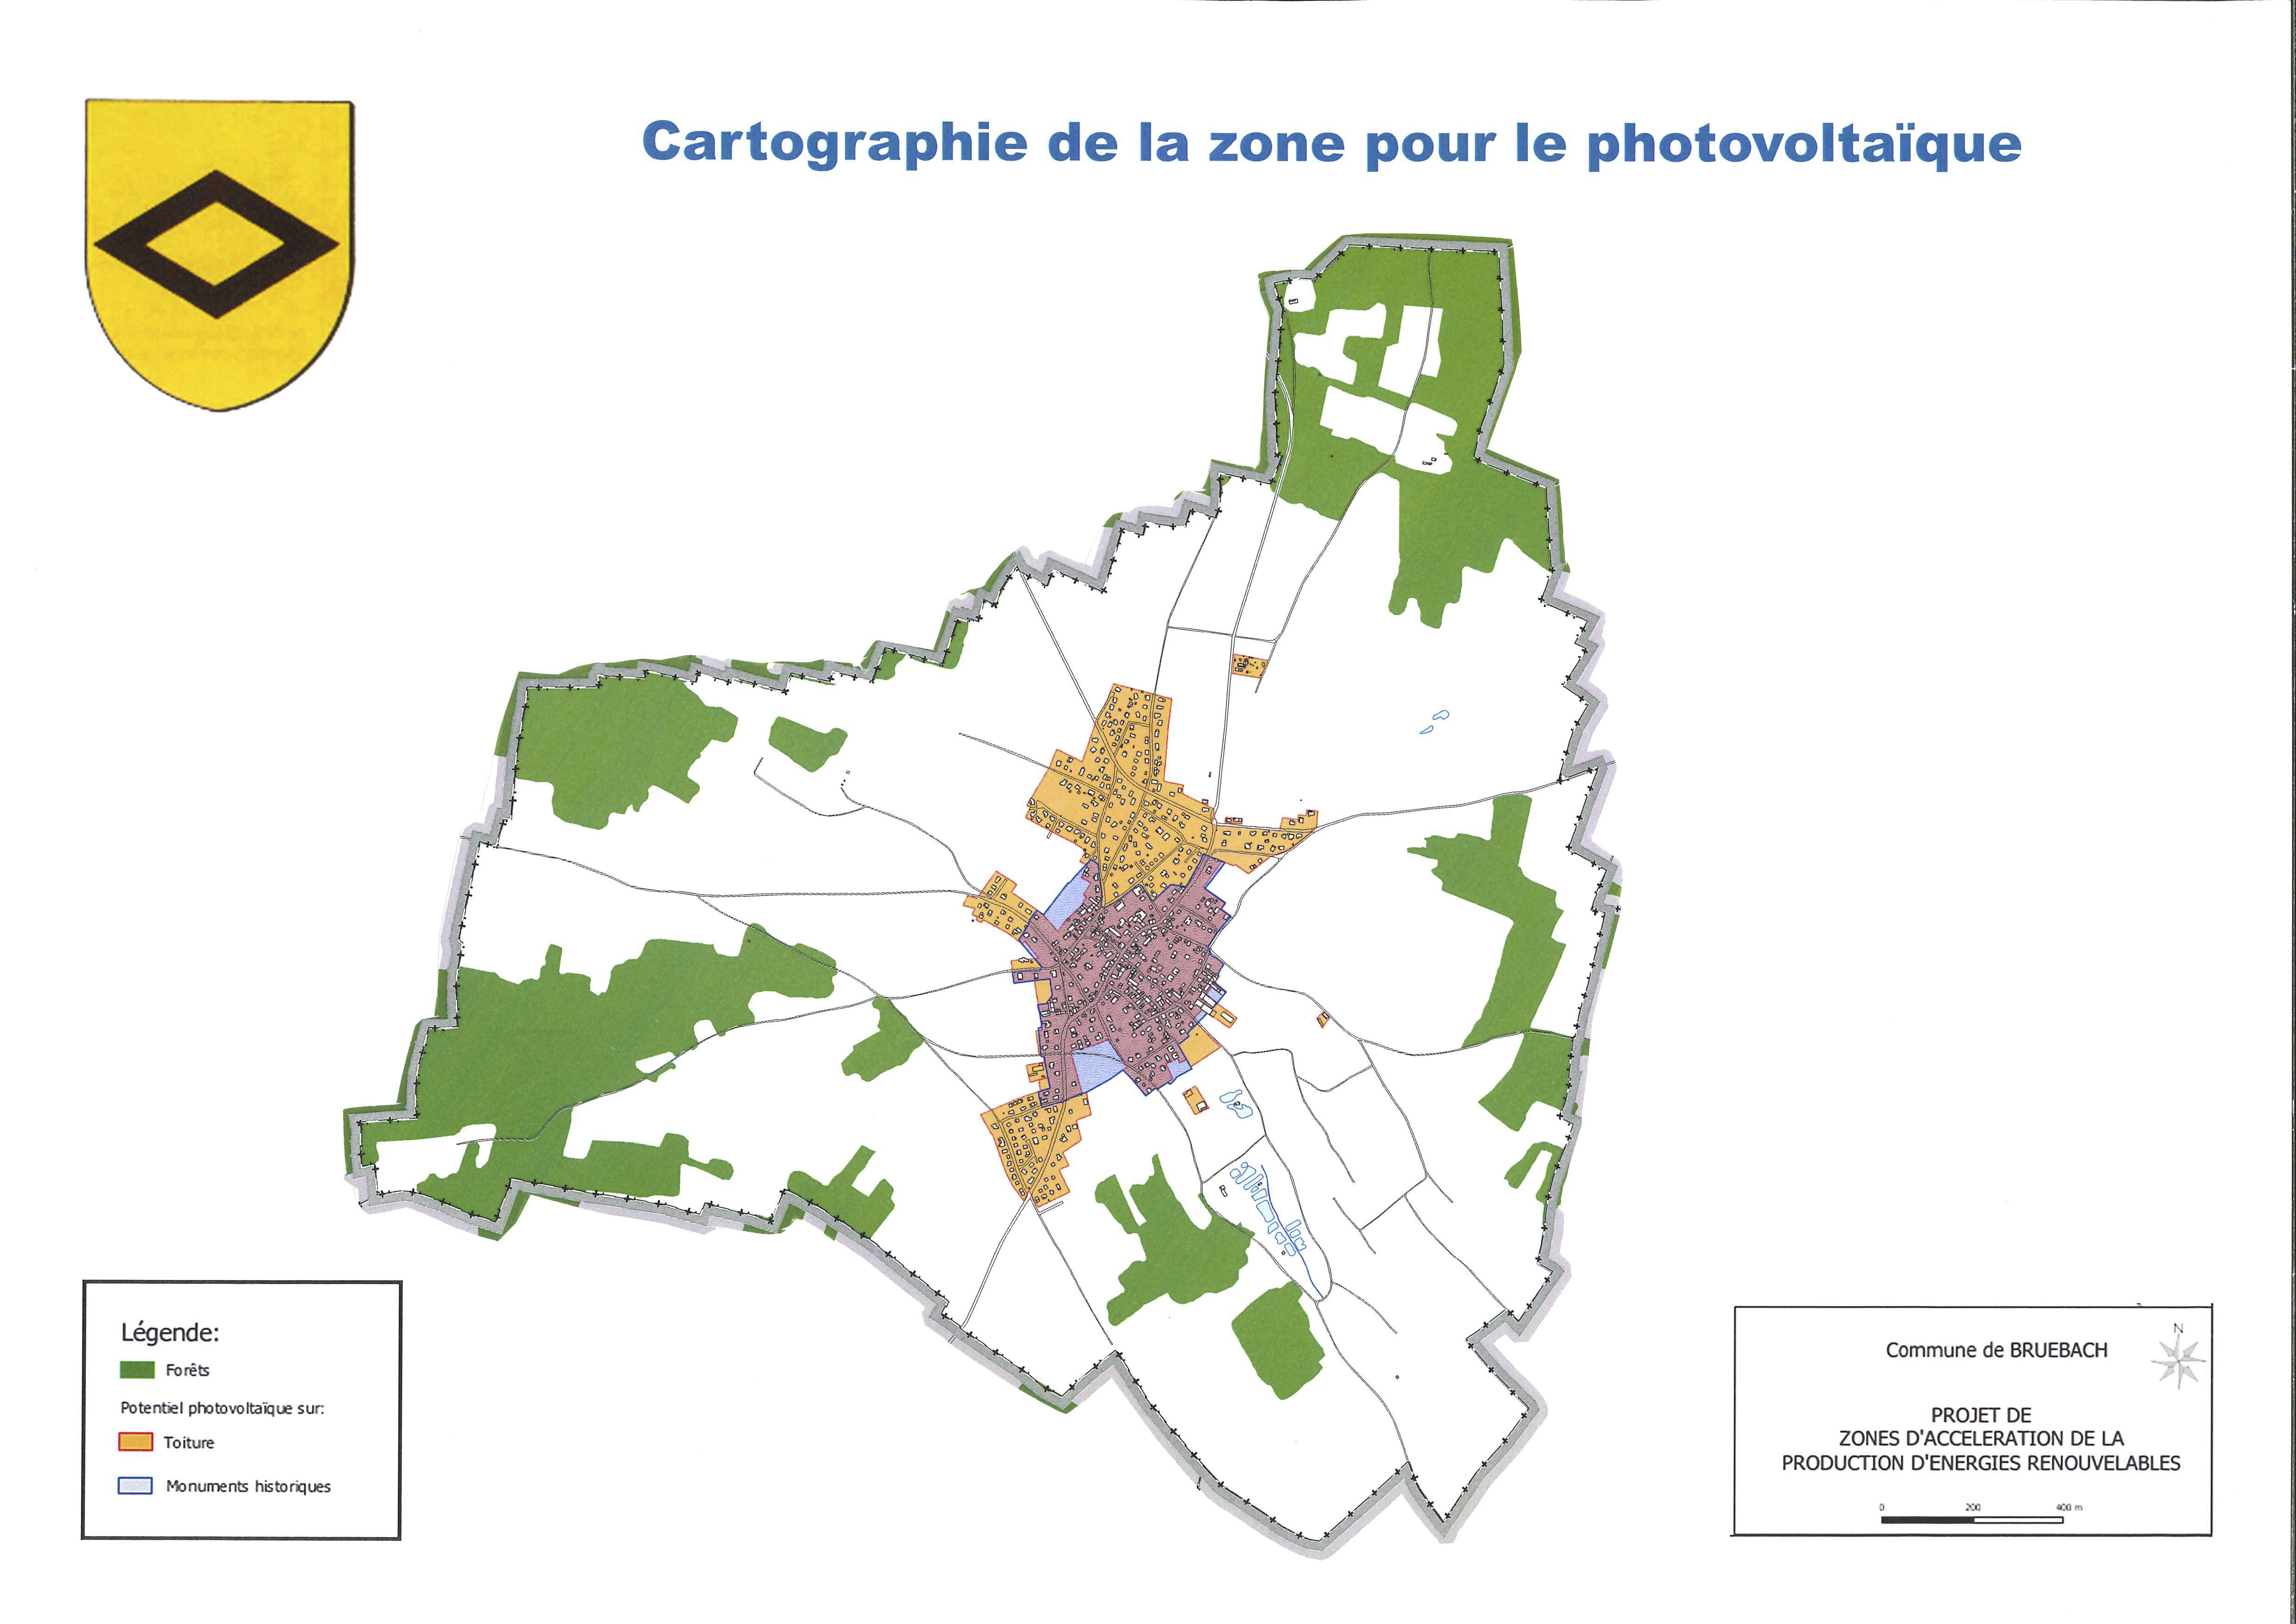 Proposition Cartographie Photovoltaïque.jpg